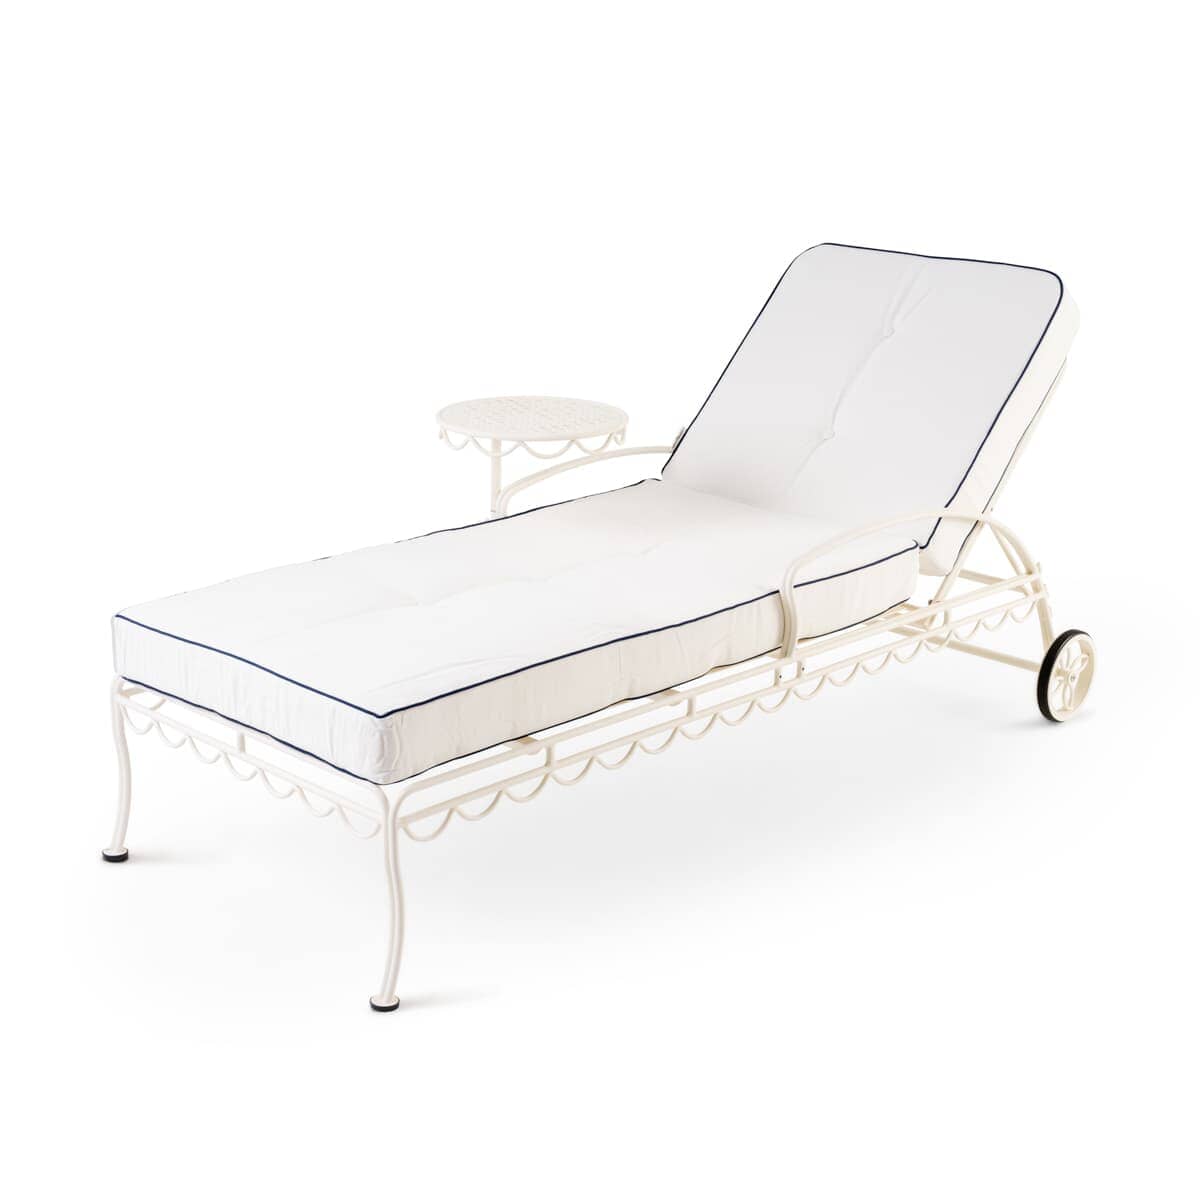 Studio image of white sun lounger cushion